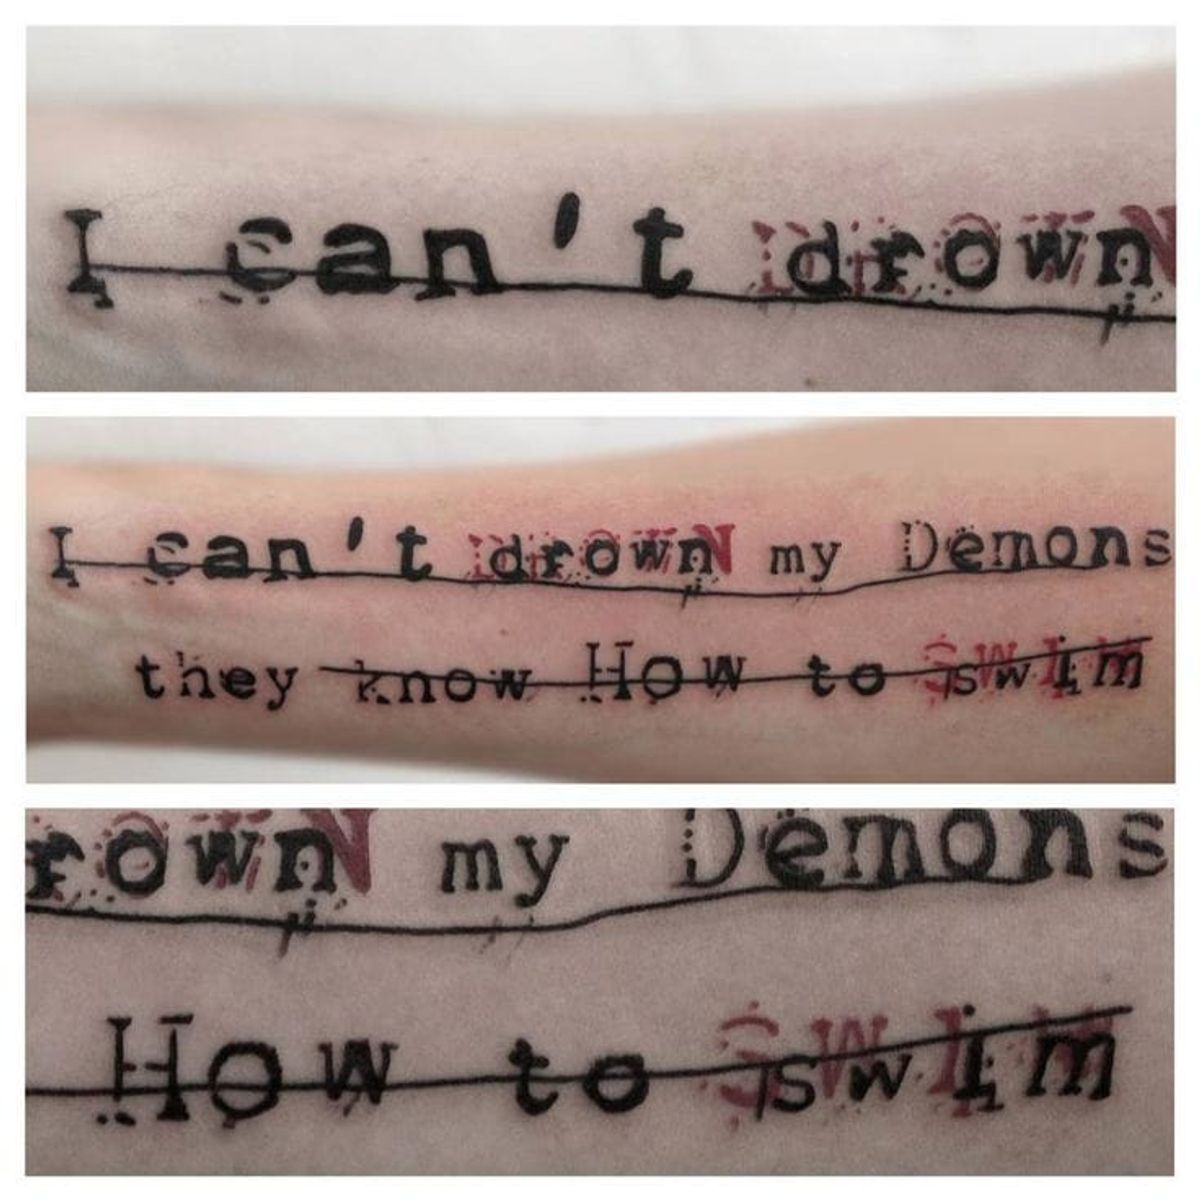 N o i r r e  Bring me the horizon lyrics, Band quotes, Music quote tattoos